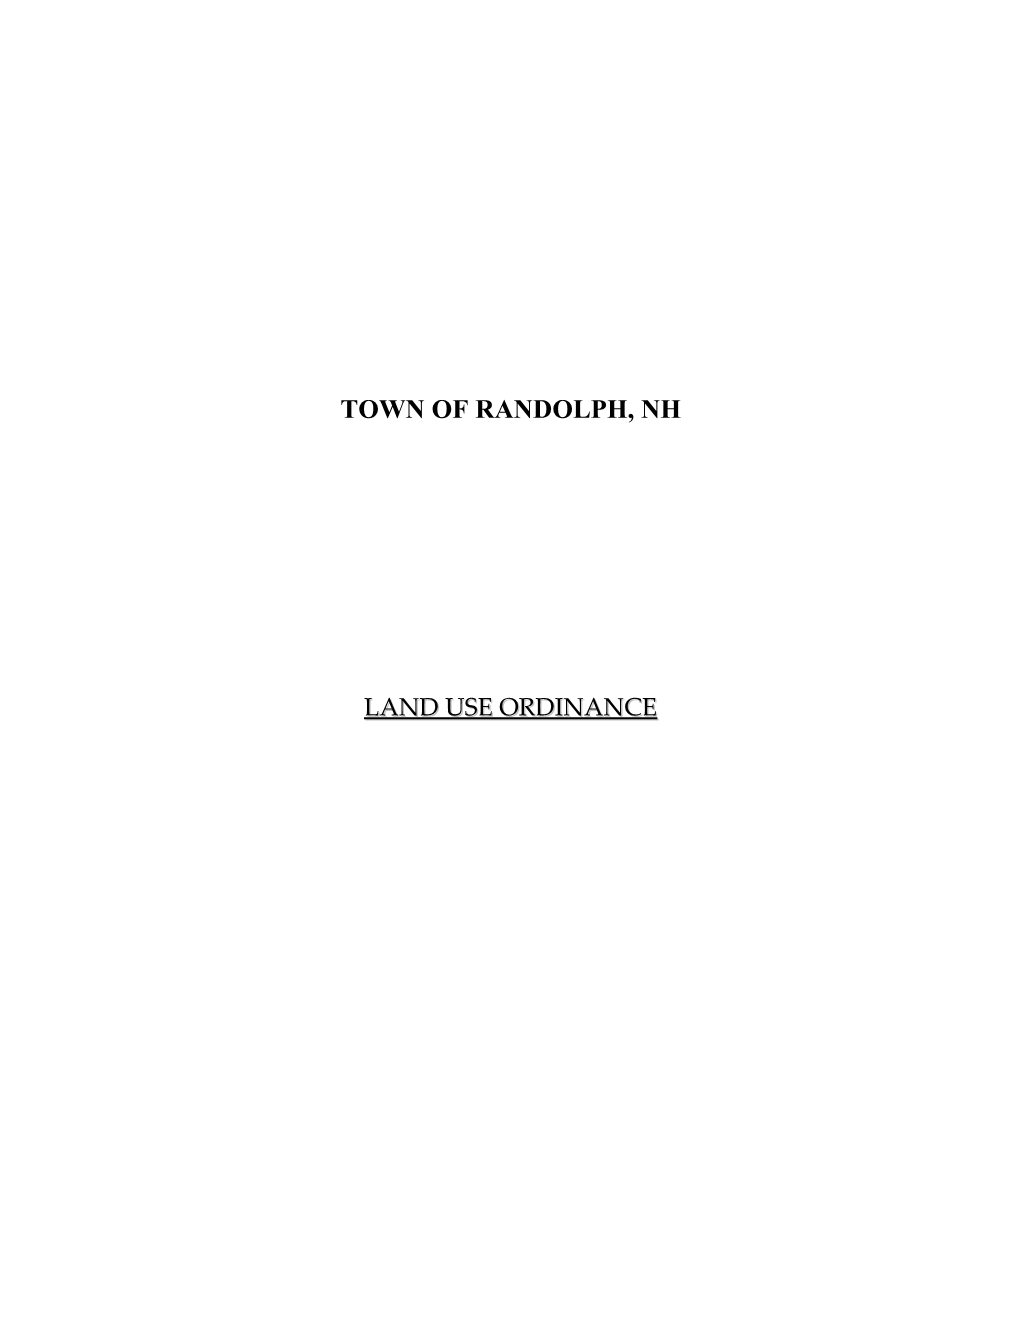 Town of Randolph, Nh